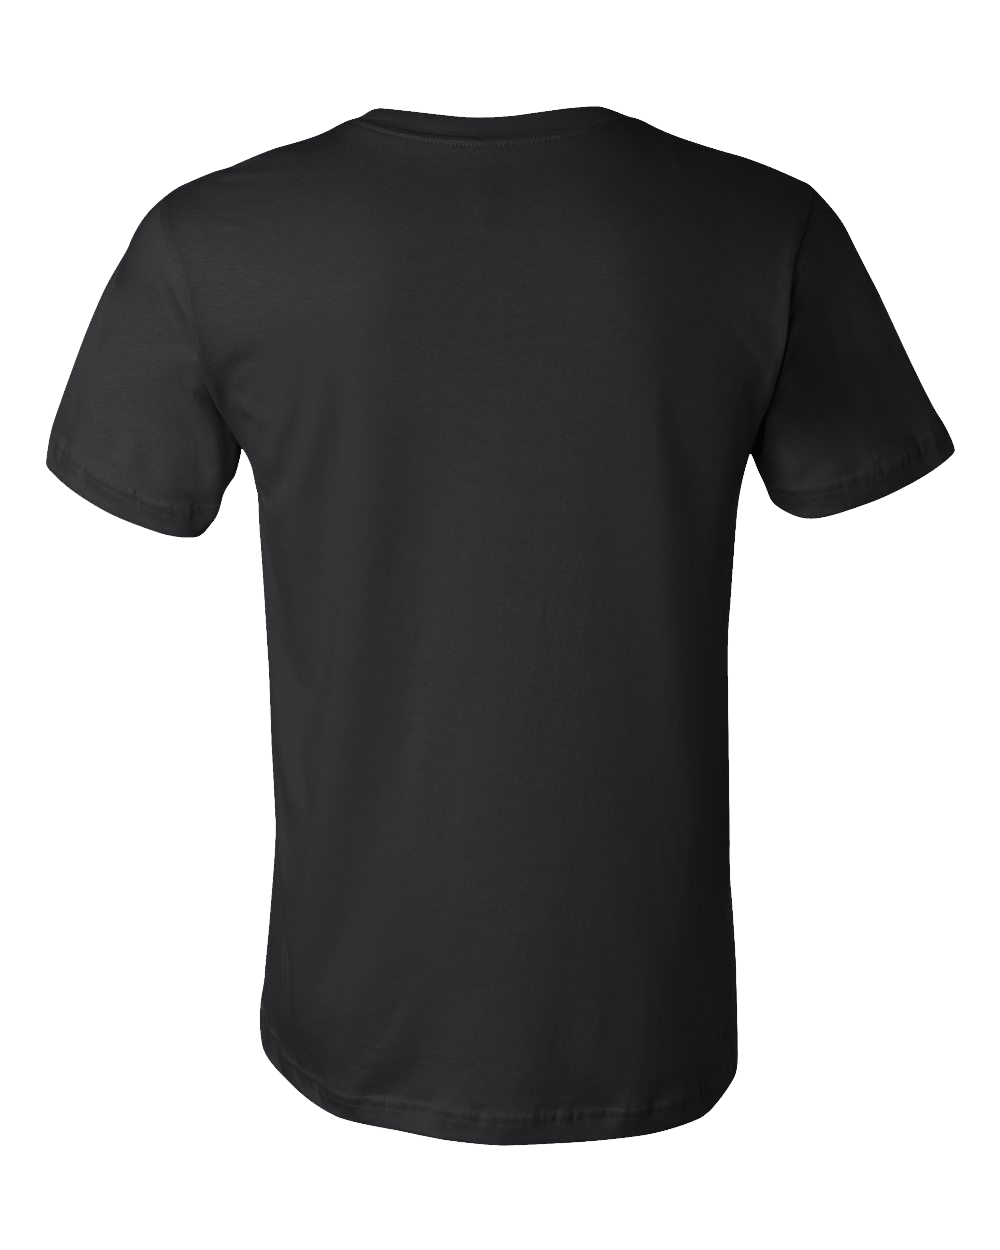 Standard Black El Cajon, CA | Retro, Vintage Style California Pride  T-shirt